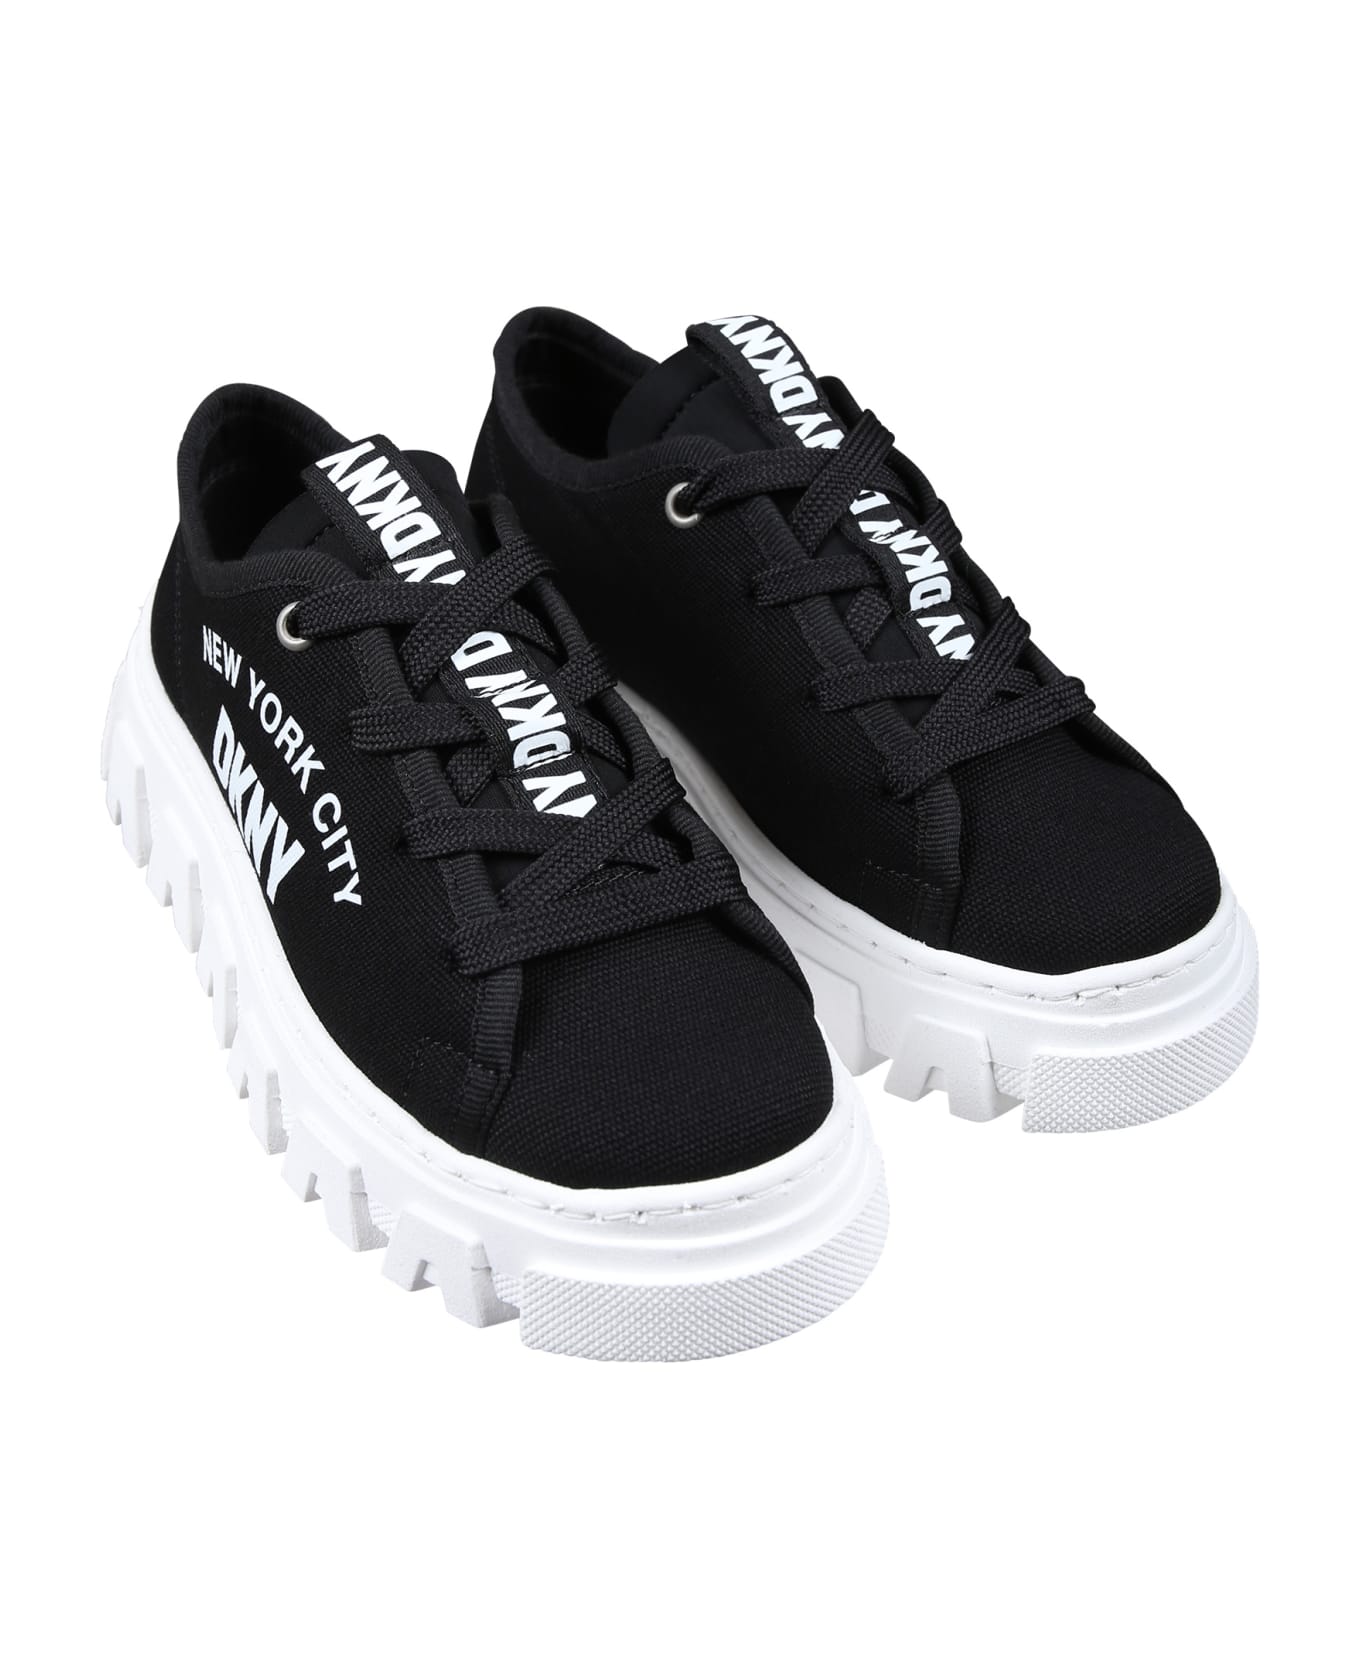 DKNY Black Sneakers For Girl With Logo - Black シューズ